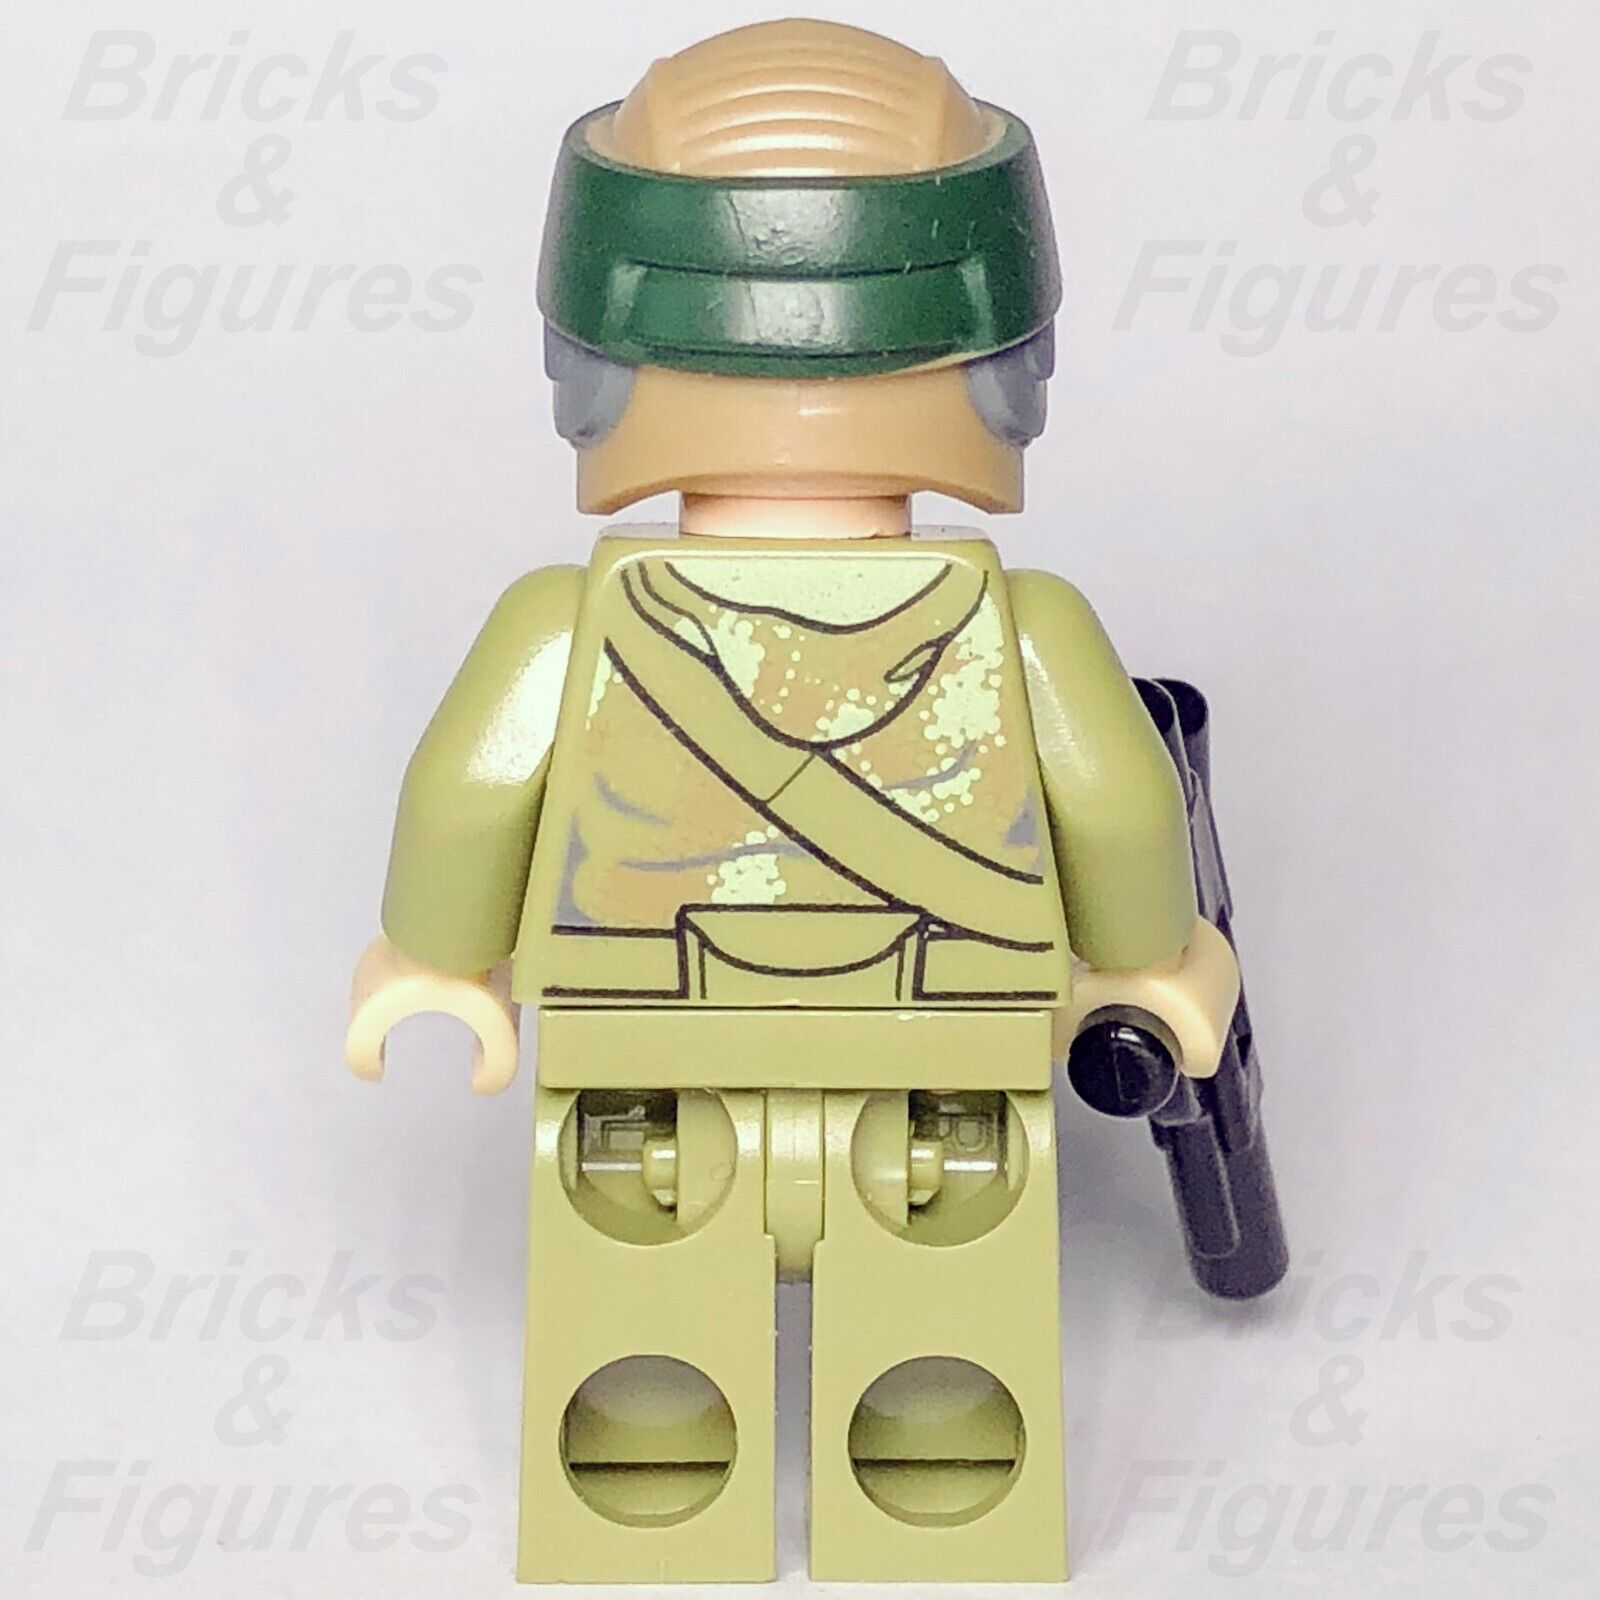 LEGO Star Wars Endor Rebel Trooper Minifigure Return of the Jedi 75094 sw0645